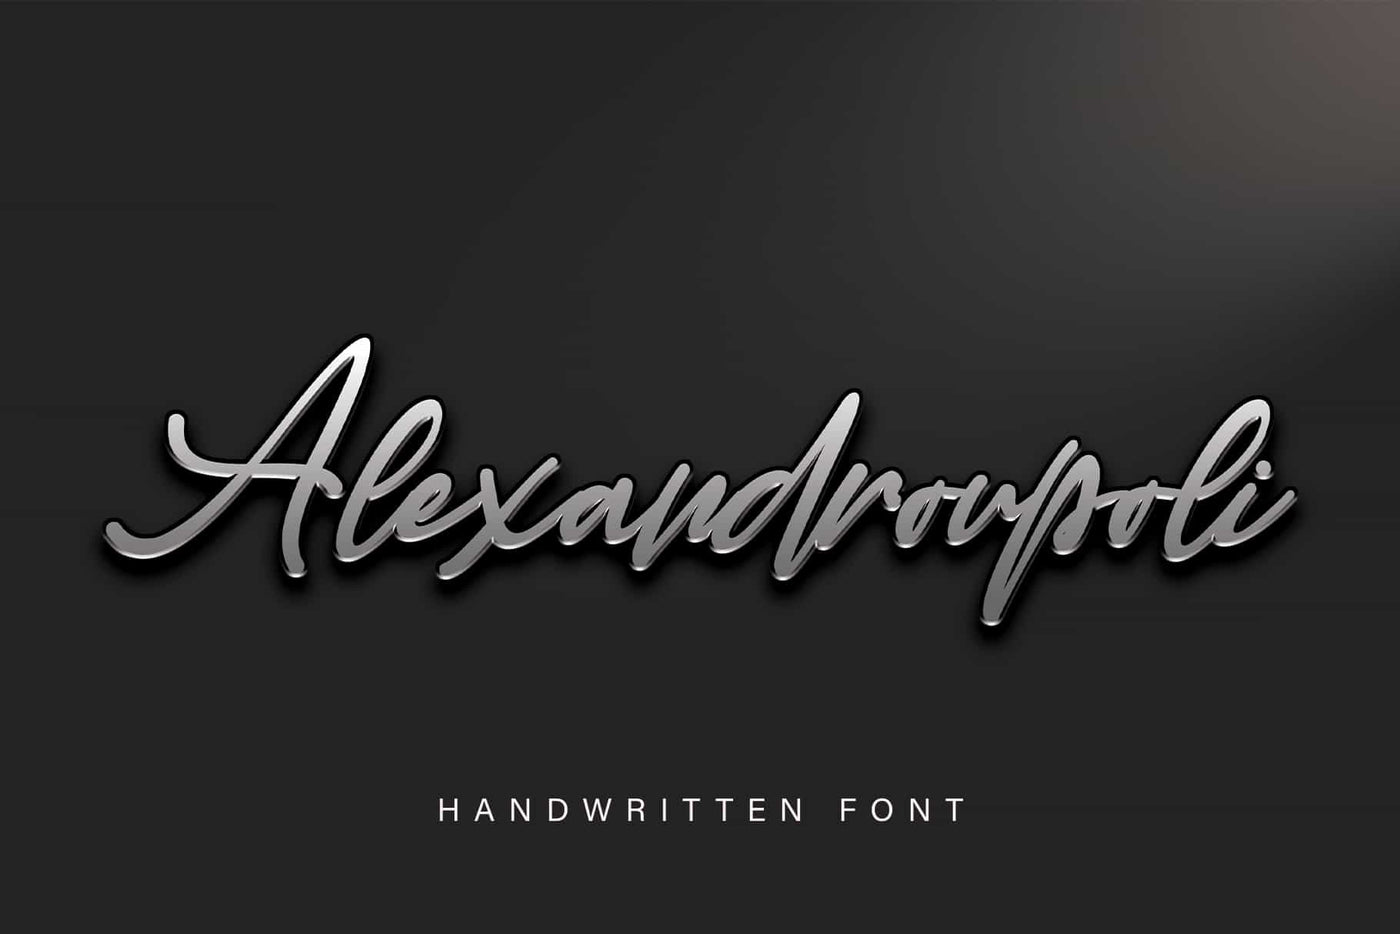 The Superlative Font Bundle - 62 Elegant Fonts - Artixty